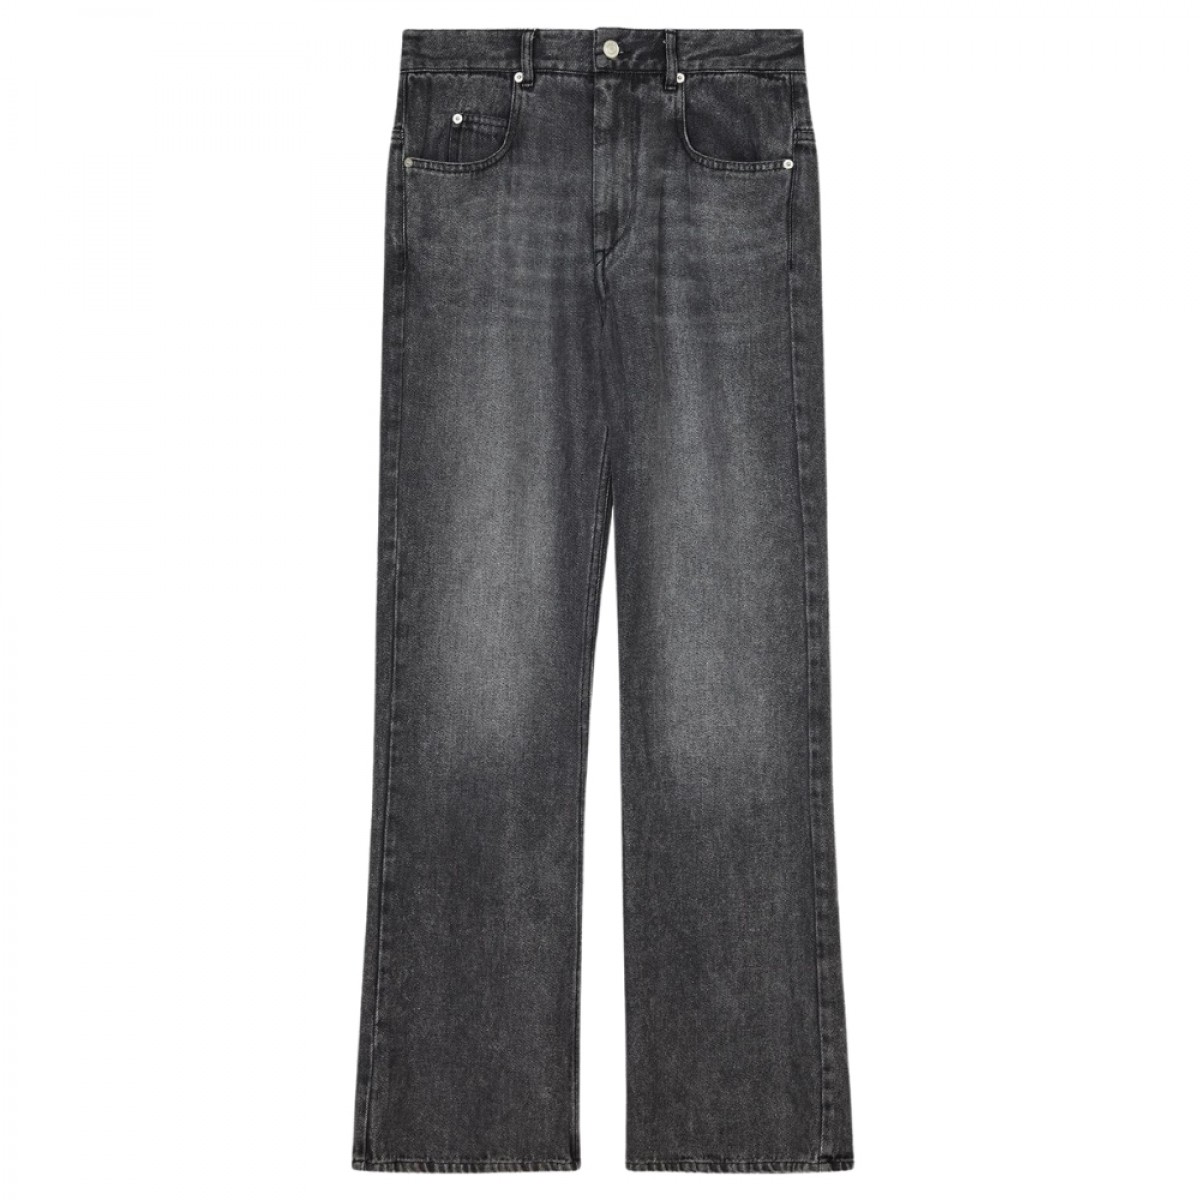 belvira jeans - grey - front